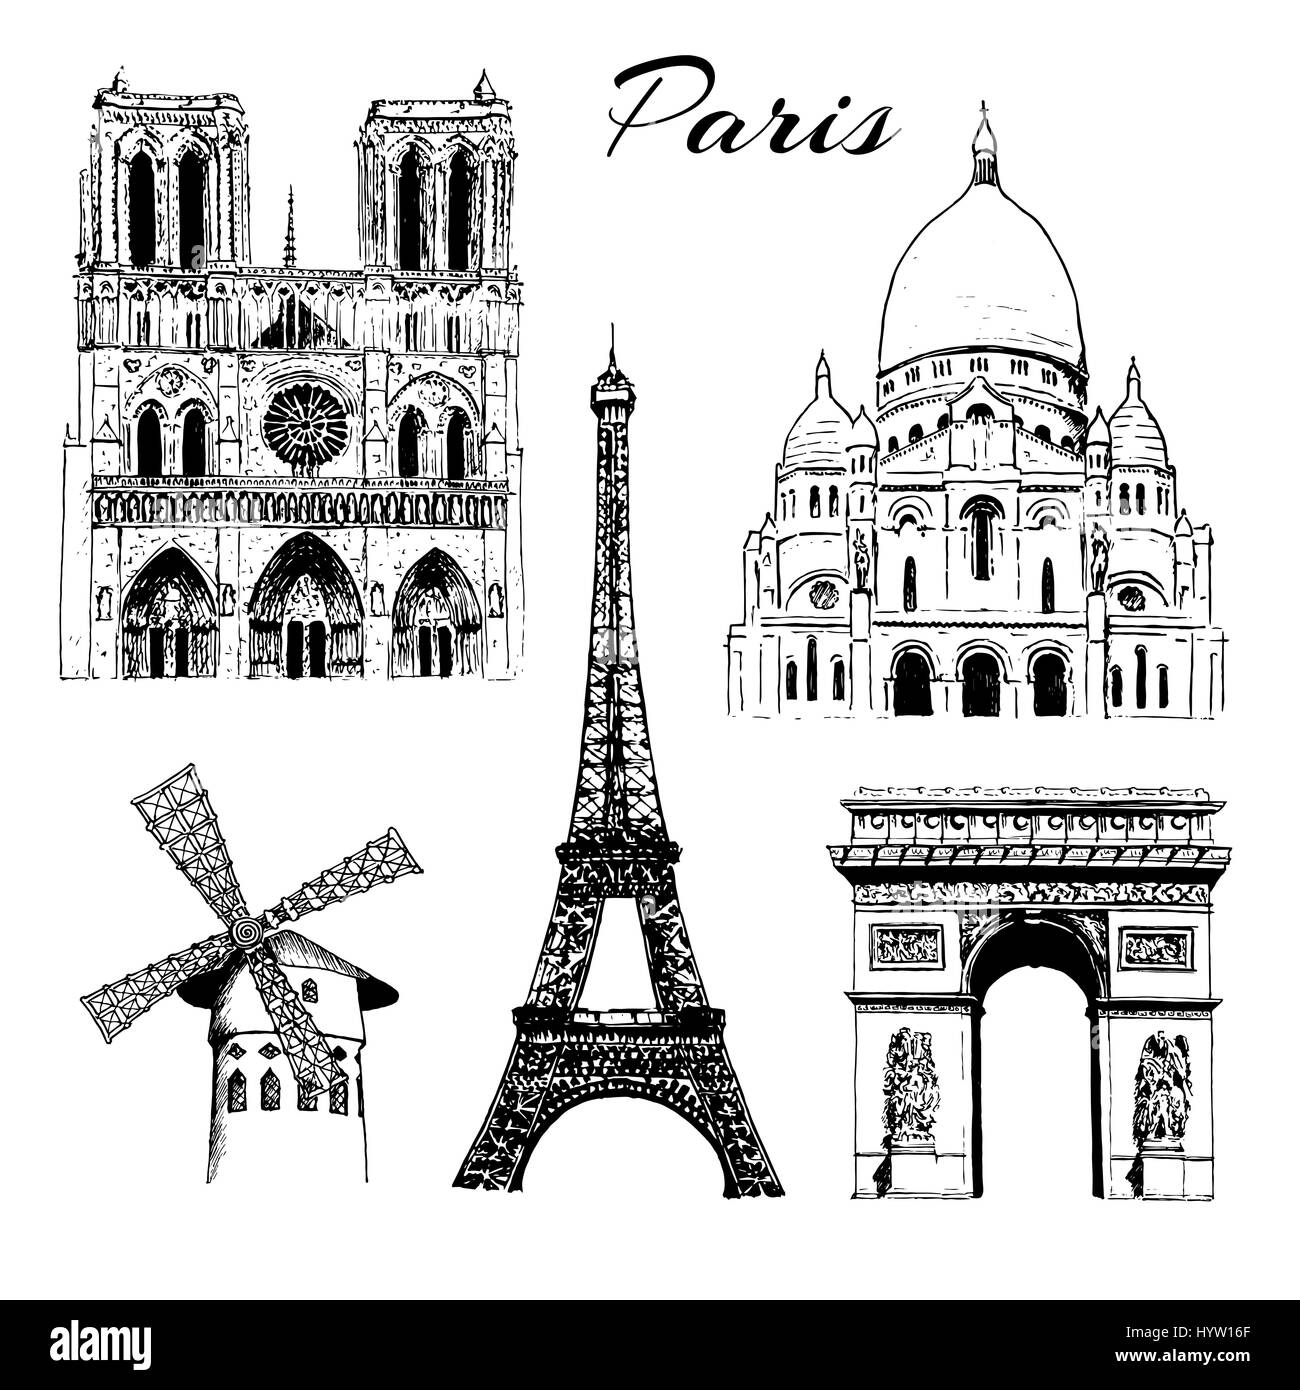 Satz von Paris Symbole. Eiffelturm, Notre Dame, Triumphbogen, Basilika Sacre Coeur, Moulin Rouge. Handgezeichnete Skizze Vektorgrafik. Stadt-pa Stock Vektor